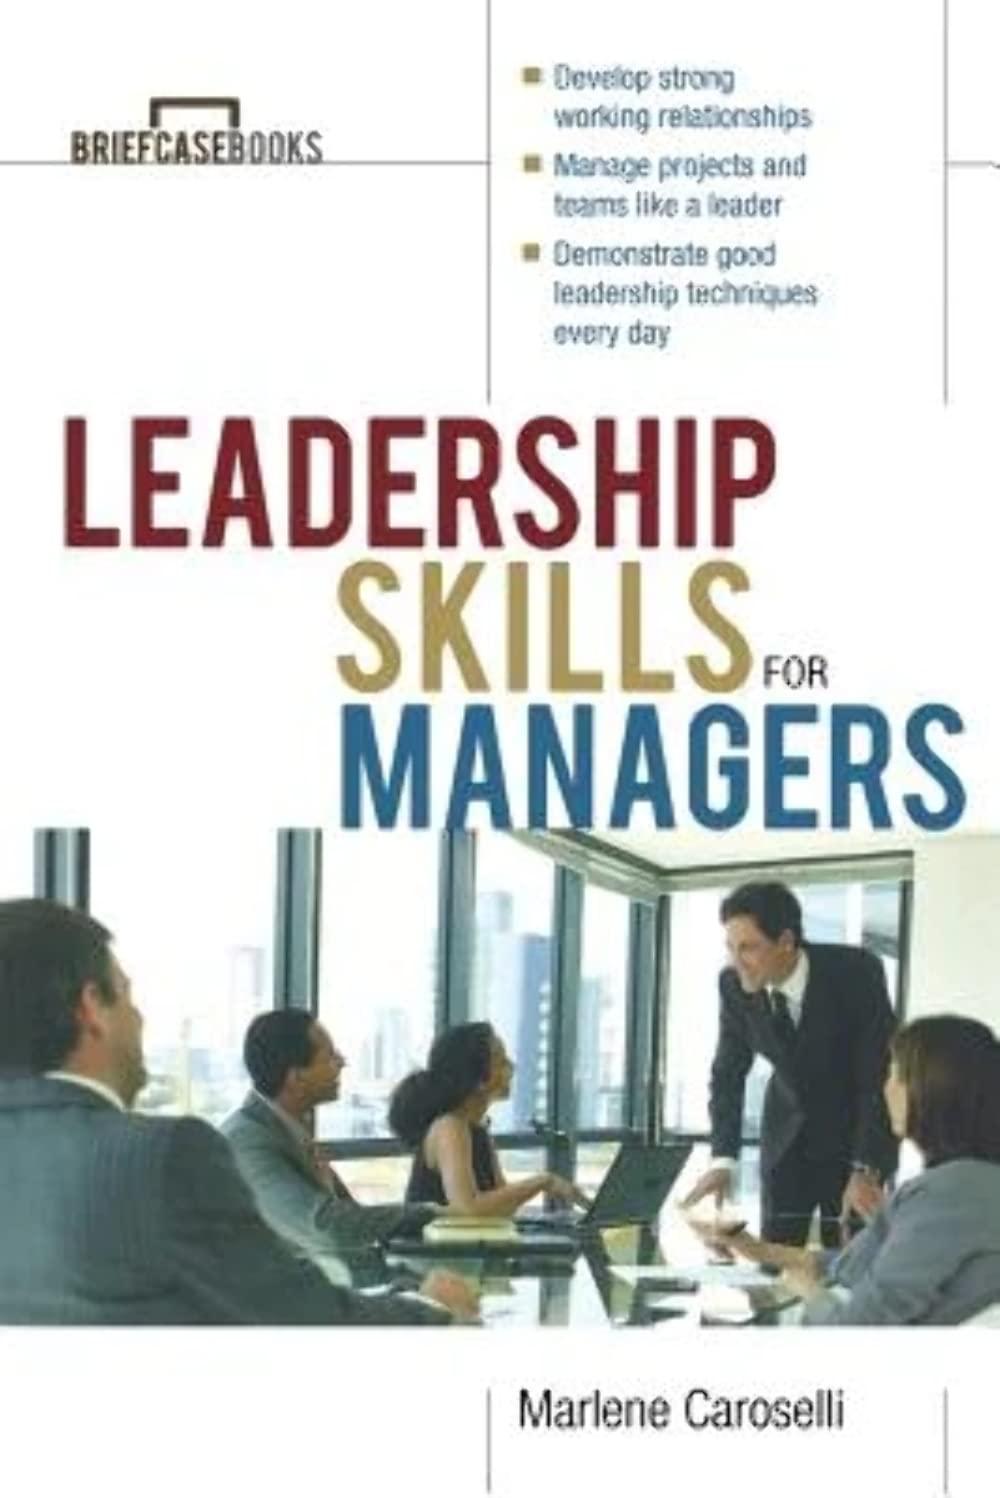 leadership skills for managers 1st edition marlene caroselli 0071364307, 0071399615, 9780071364300,